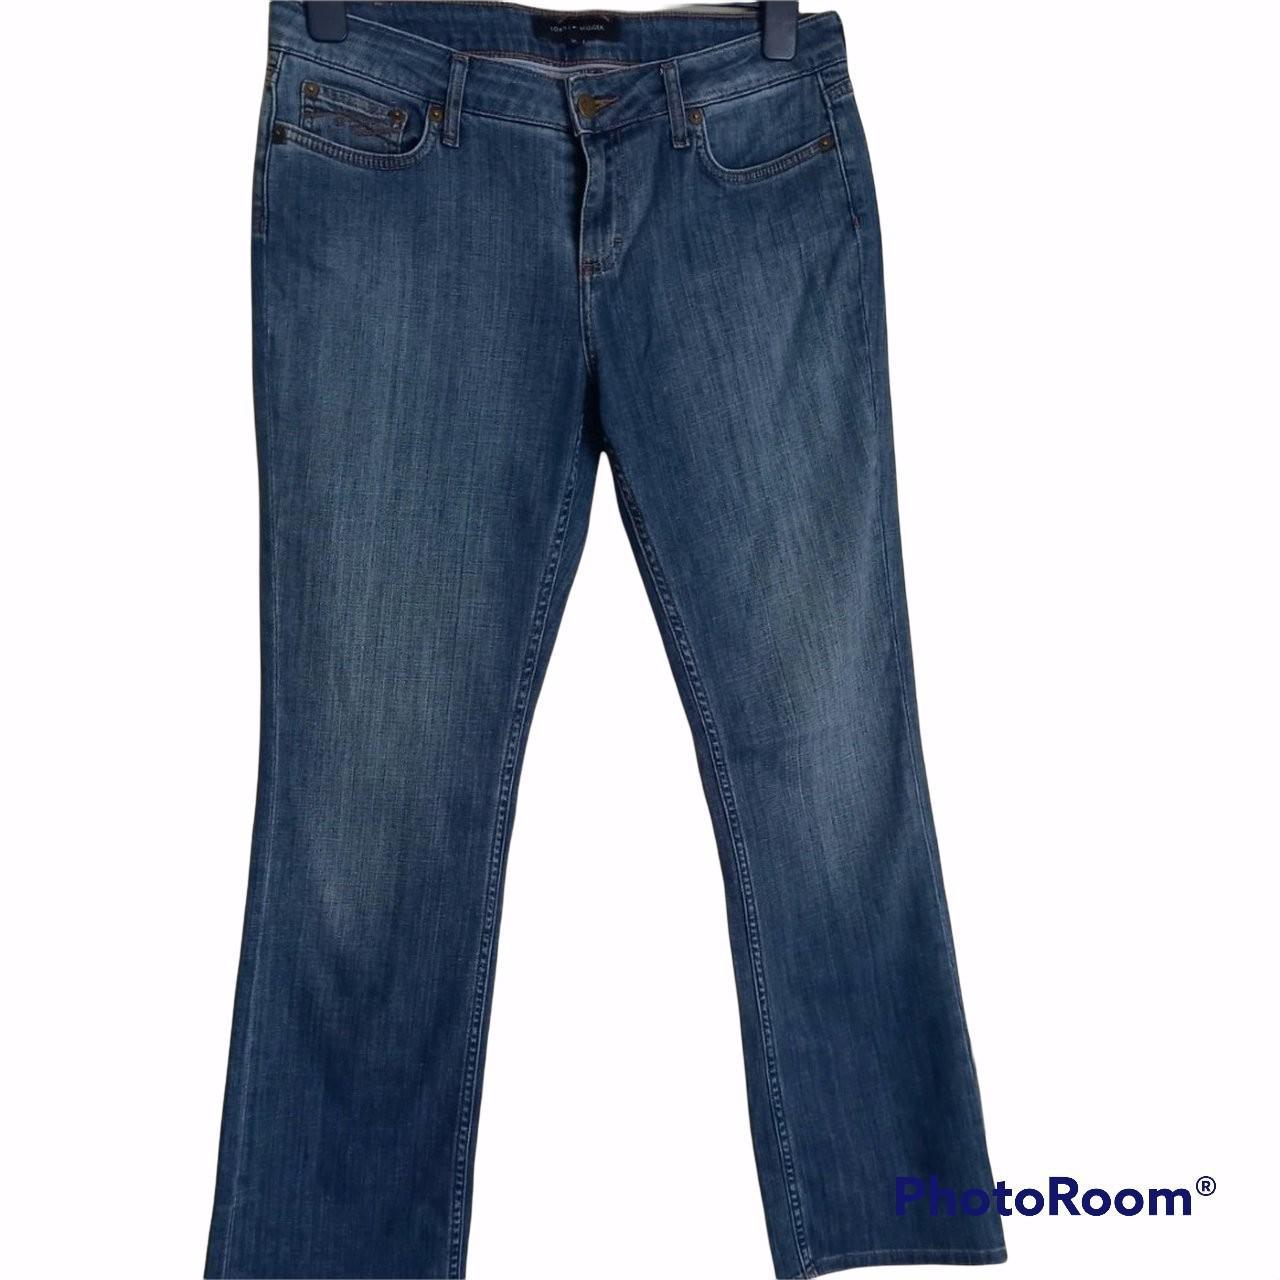 Tommy Hillfiger jeans, low rise, 30 inch waist, 32... - Depop